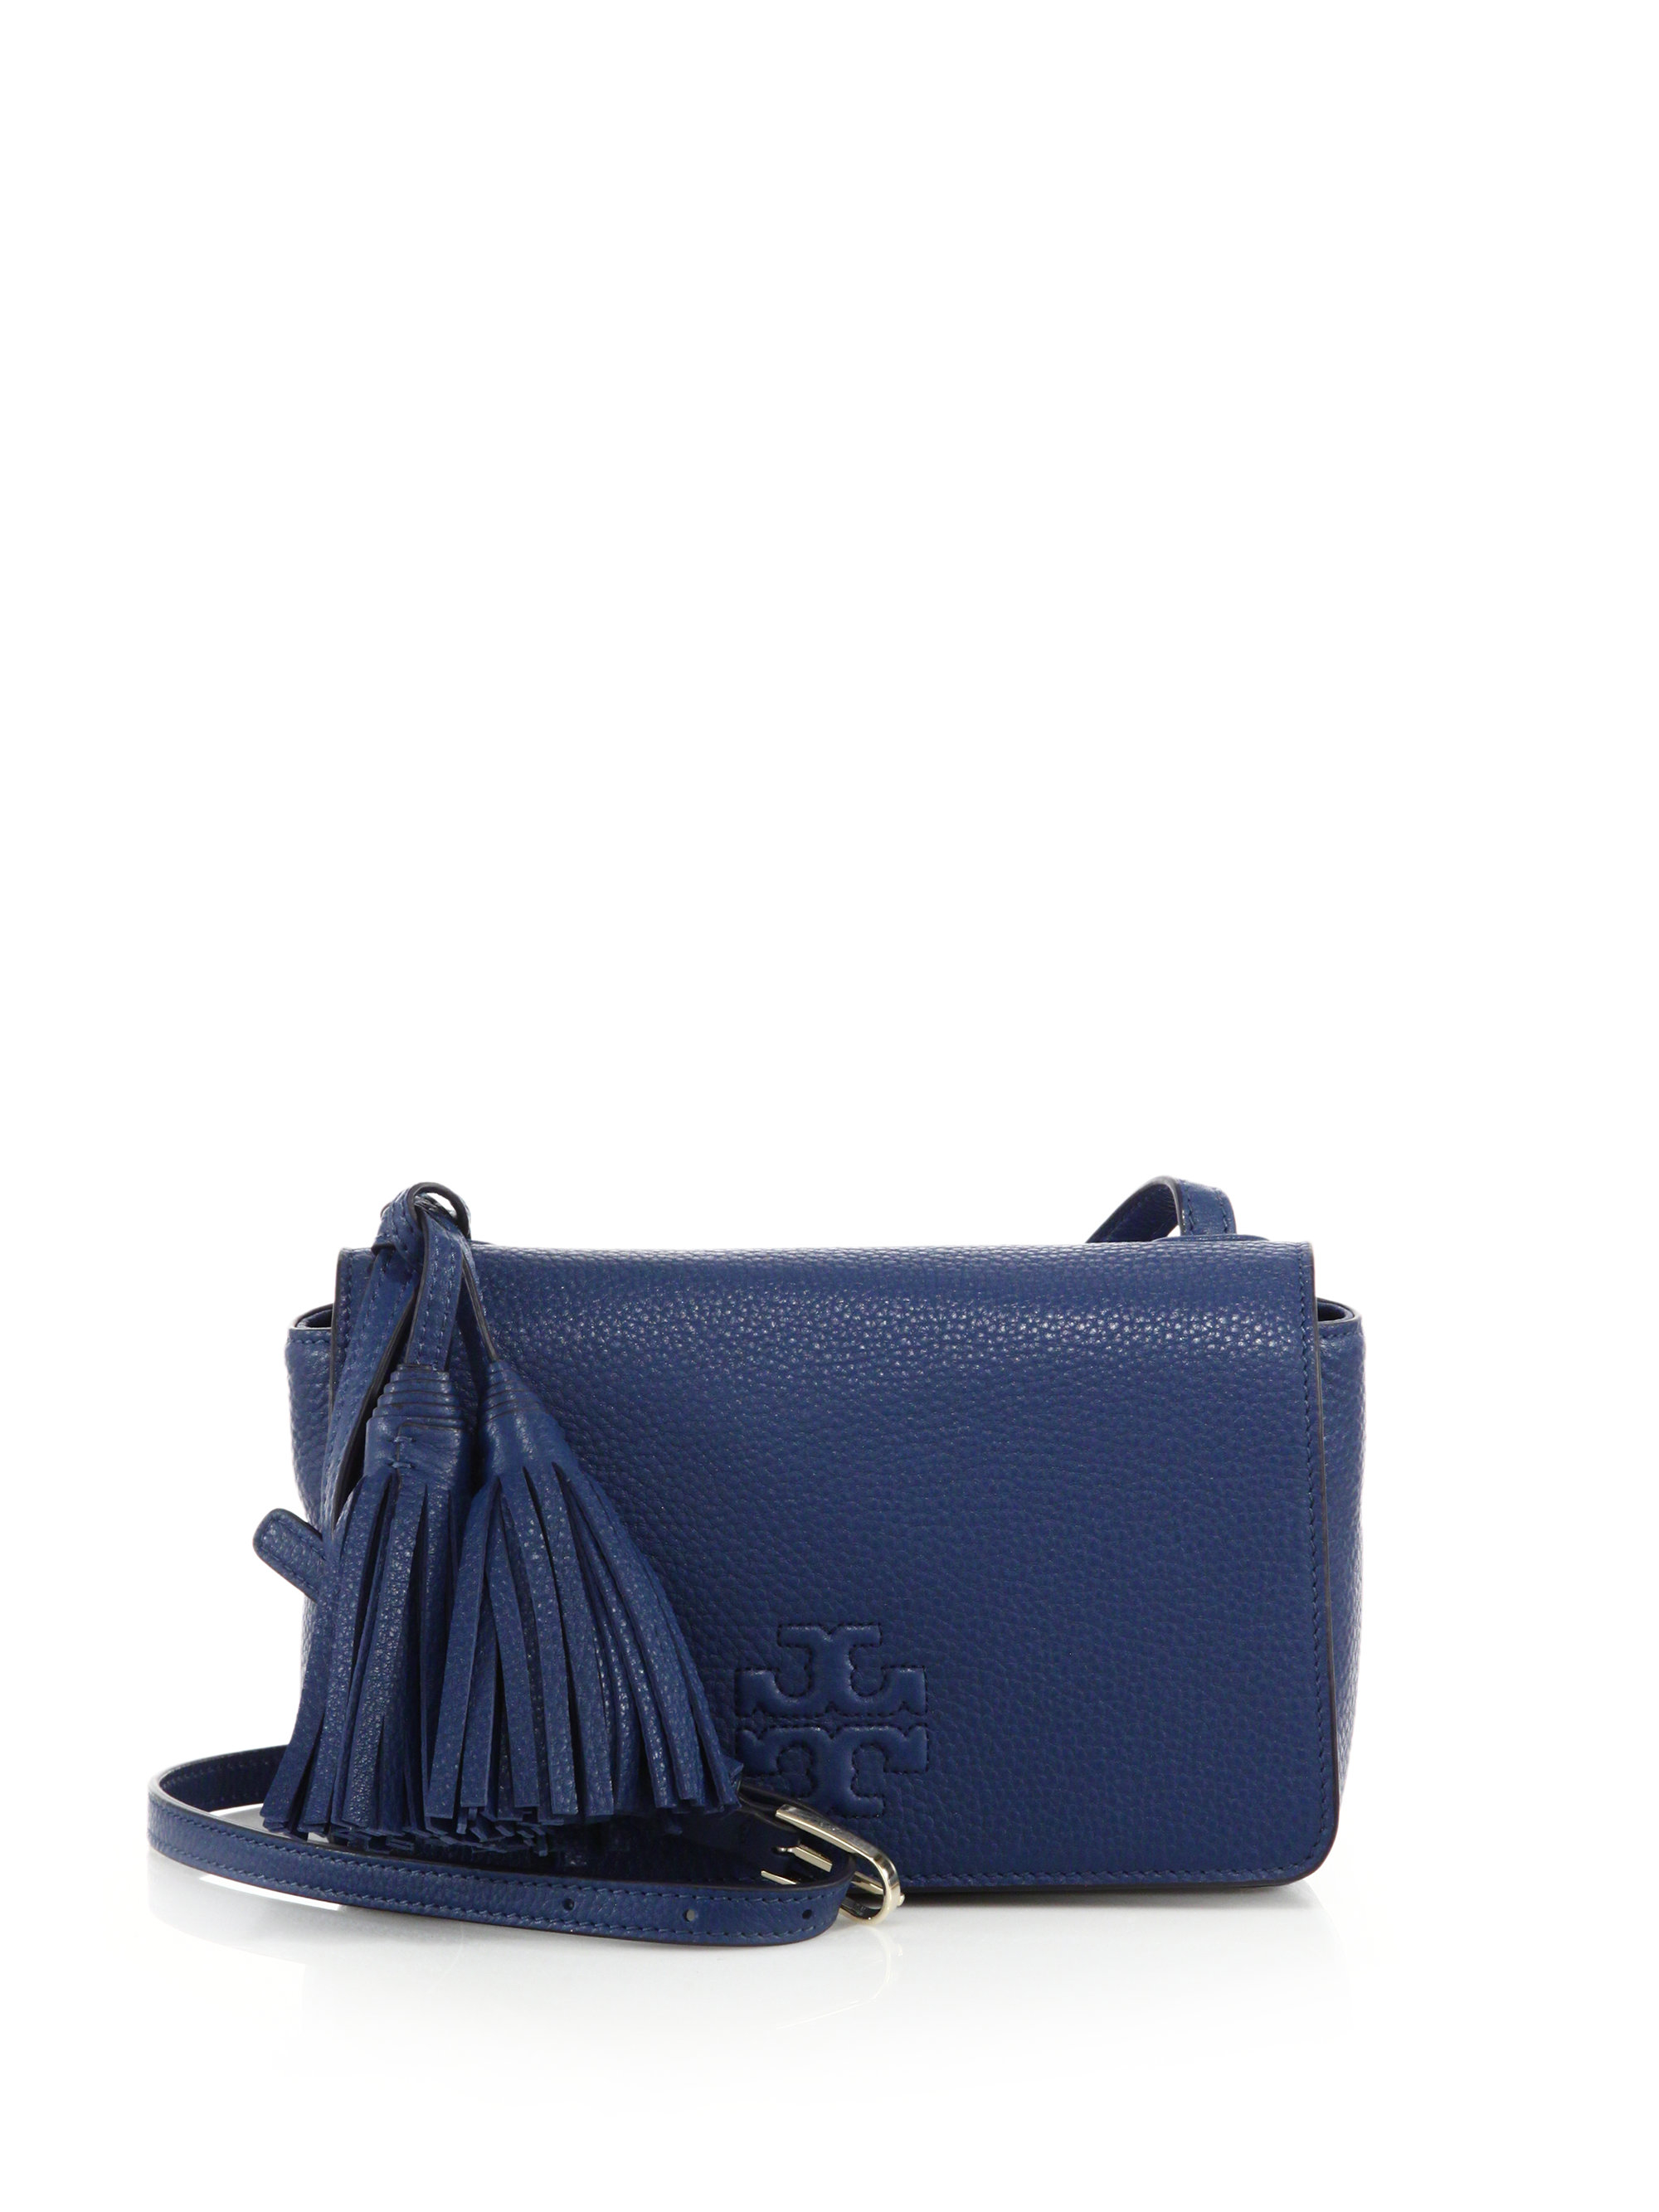 Tory Burch Thea Mini Leather Tassel Crossbody Bag in Blue